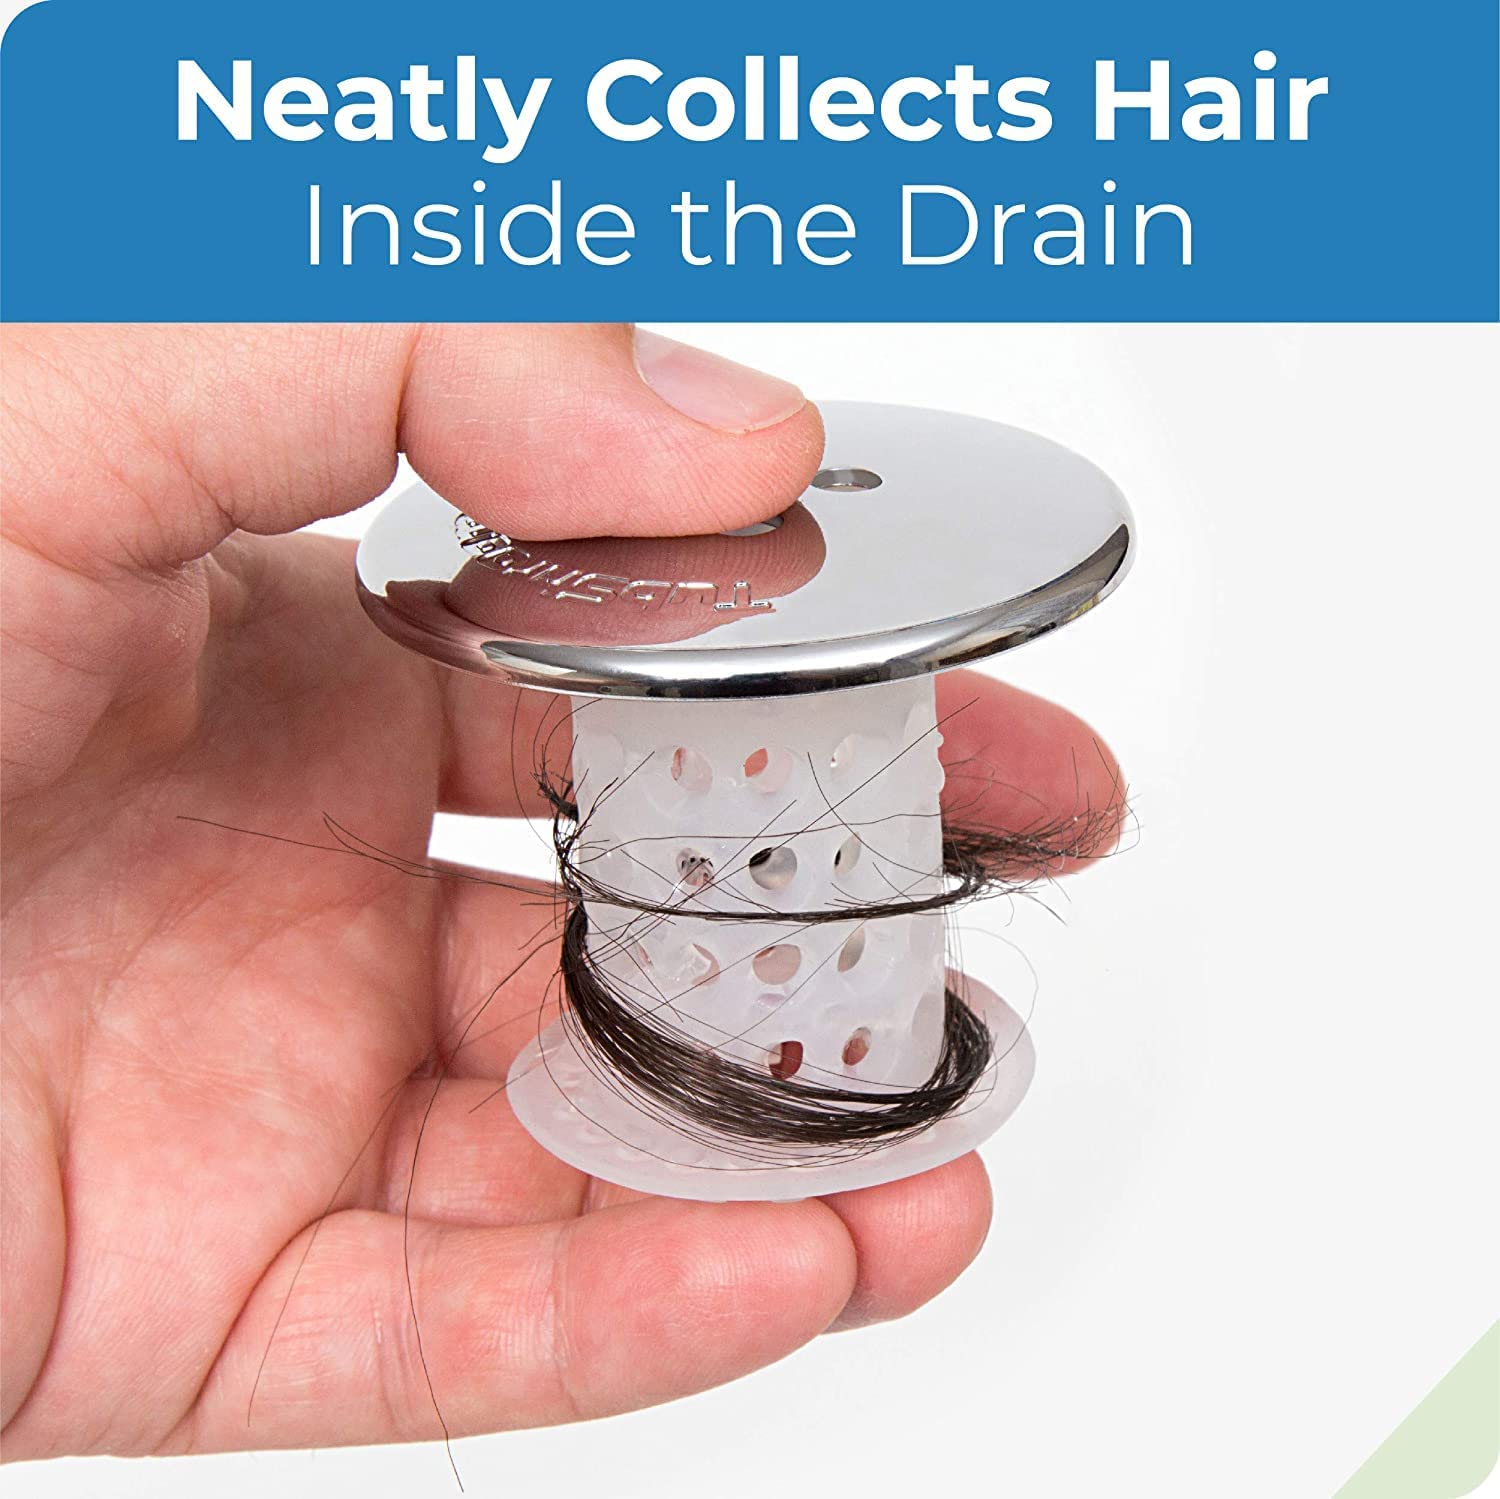 TubShroom Tub Drain Hair Catcher, Chrome – Drain Protector and Hair Catcher for Bathroom Drains, Fits 1.5” – 1.75” Bathtub and Shower Drains